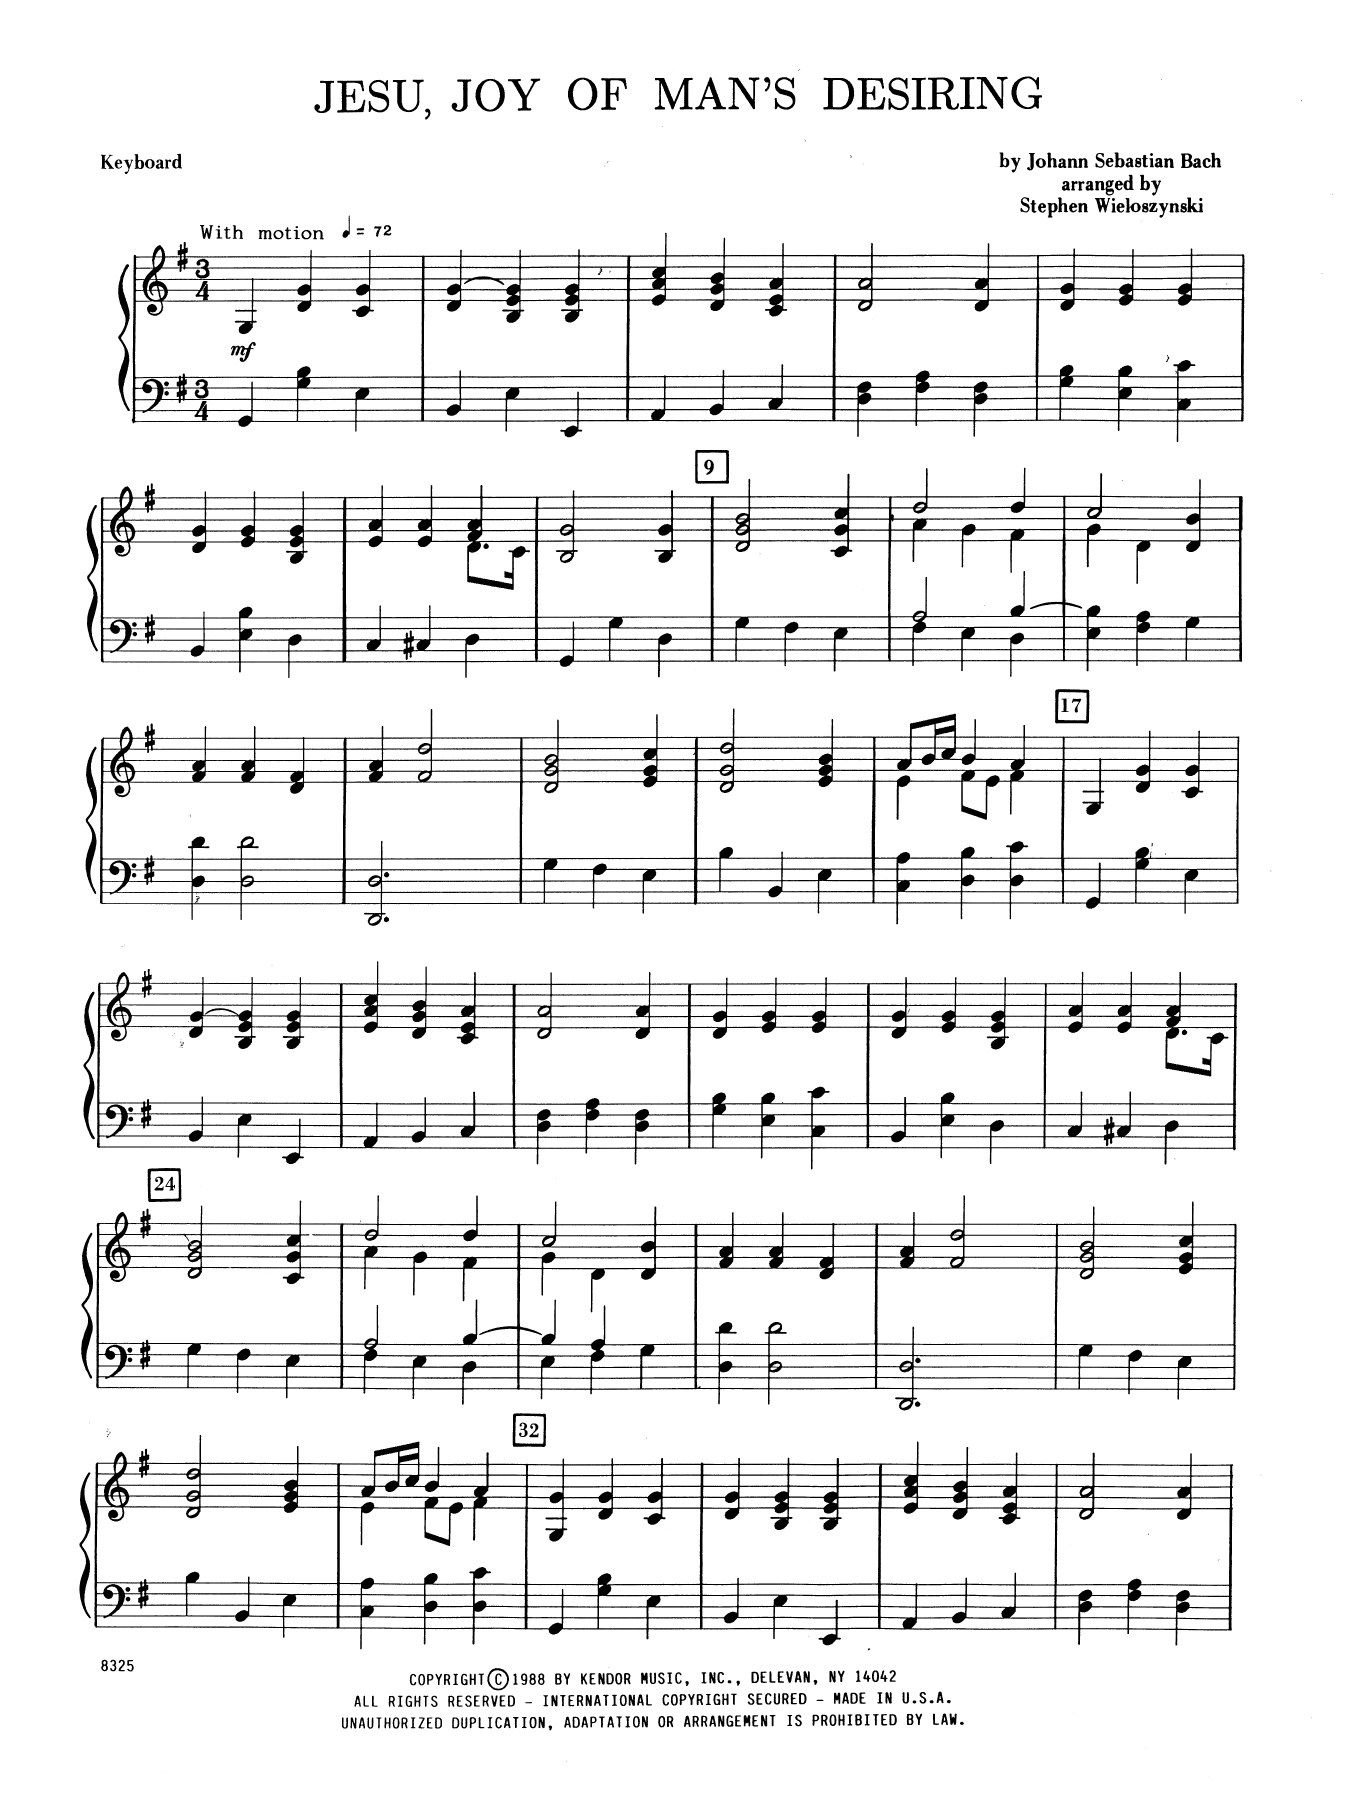 Download Stephen Wieloszynski Jesu, Joy of Man's Desiring - Piano Acc Sheet Music